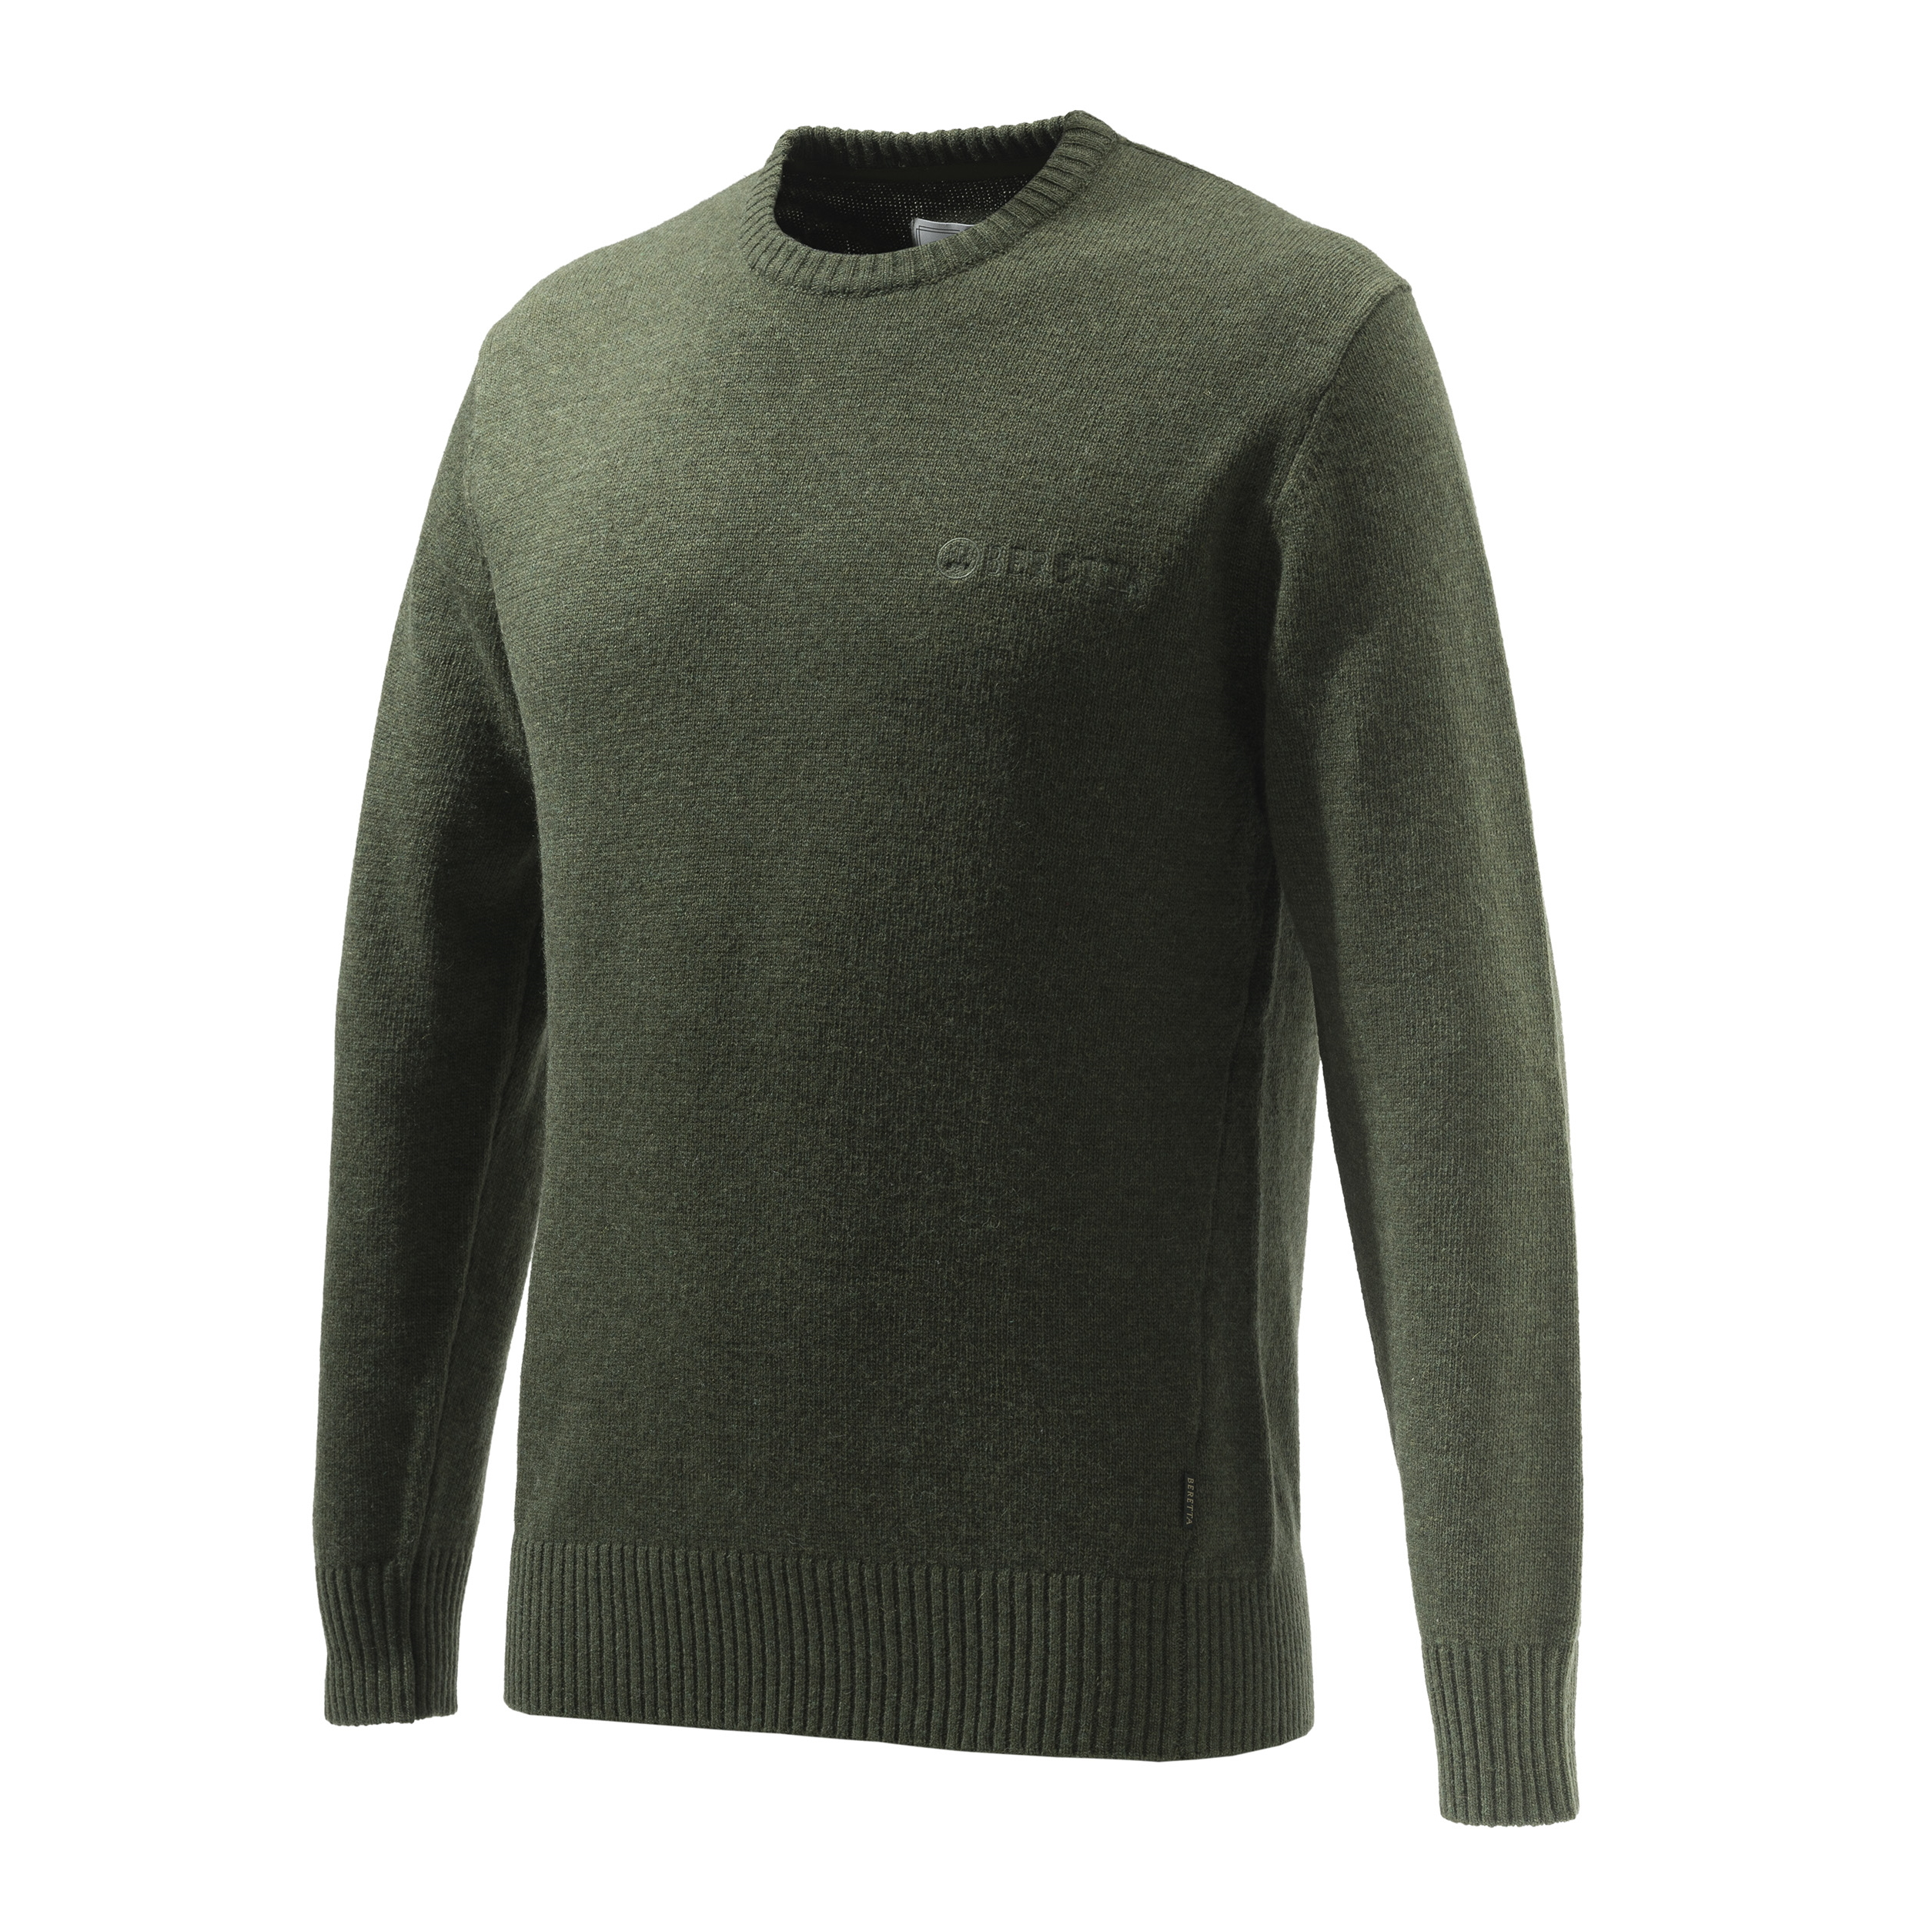 Beretta Beretta Men's Devon Crewneck Sweater Green S, Green